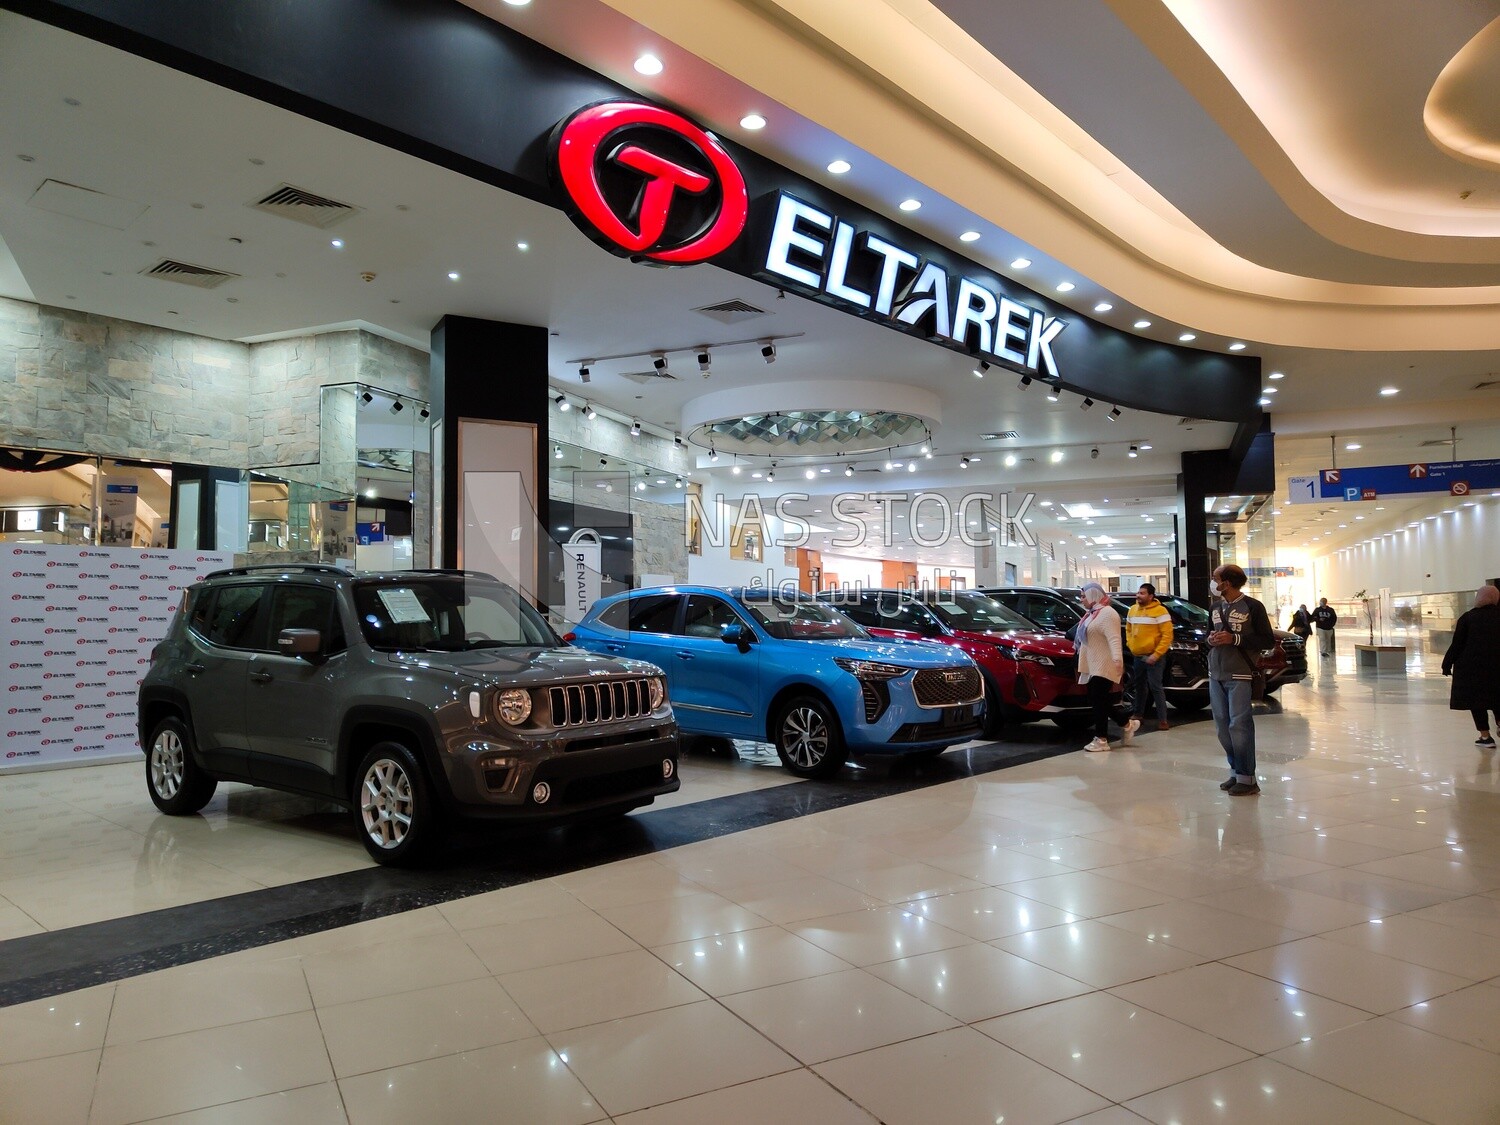 Car showroom that displays the latest car models